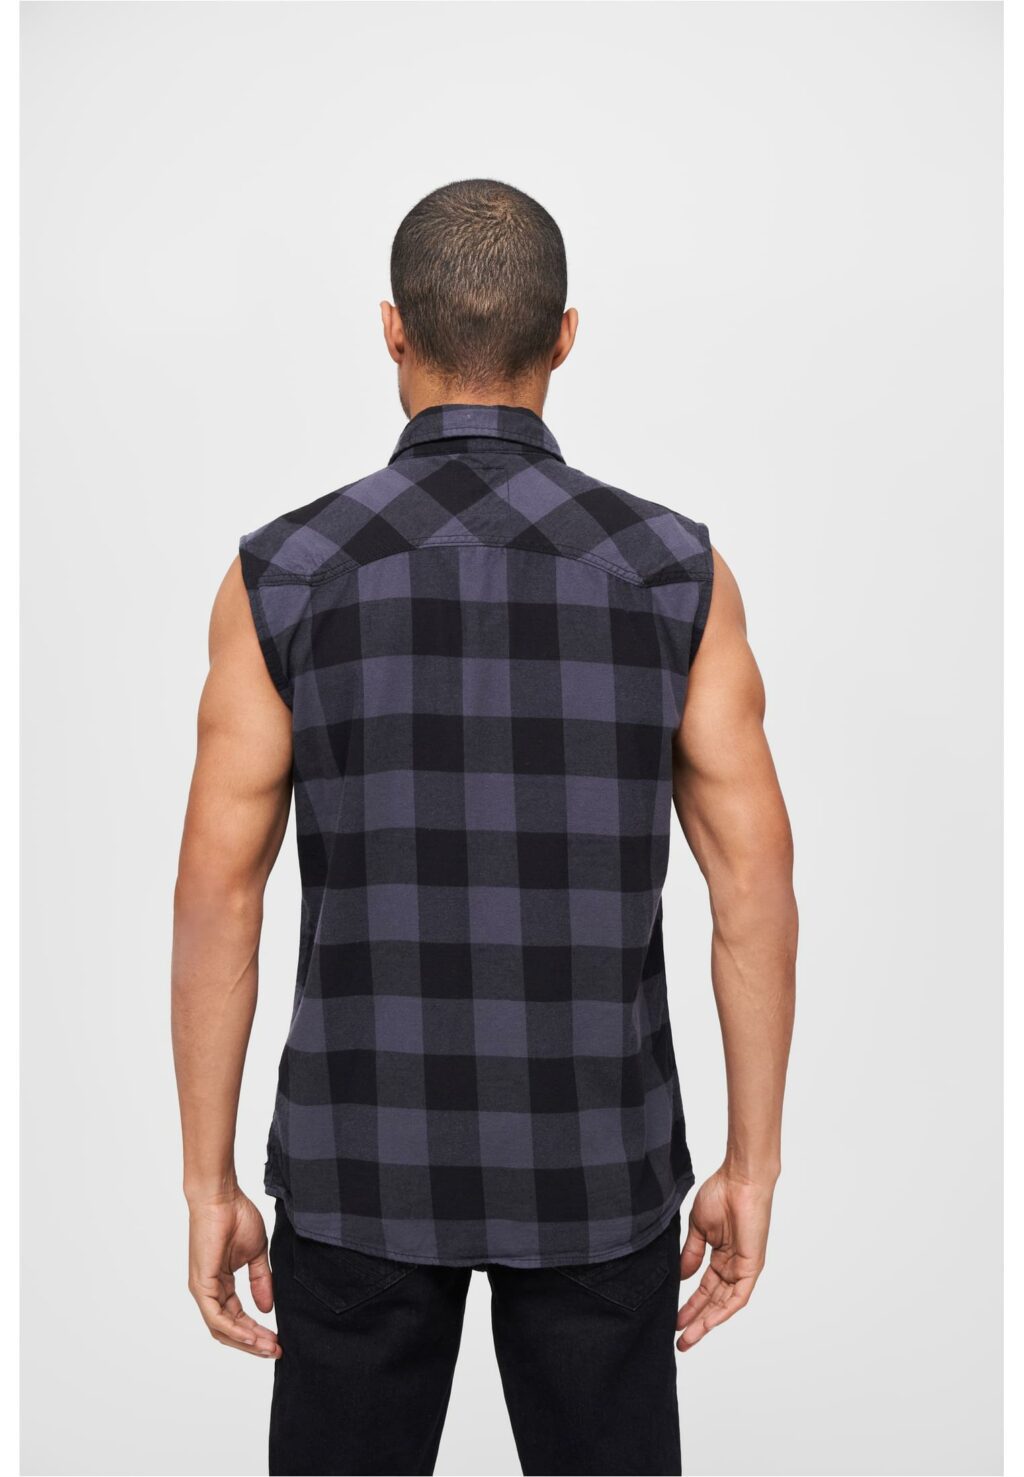 Brandit Checkshirt Sleeveless black/grey BD4031